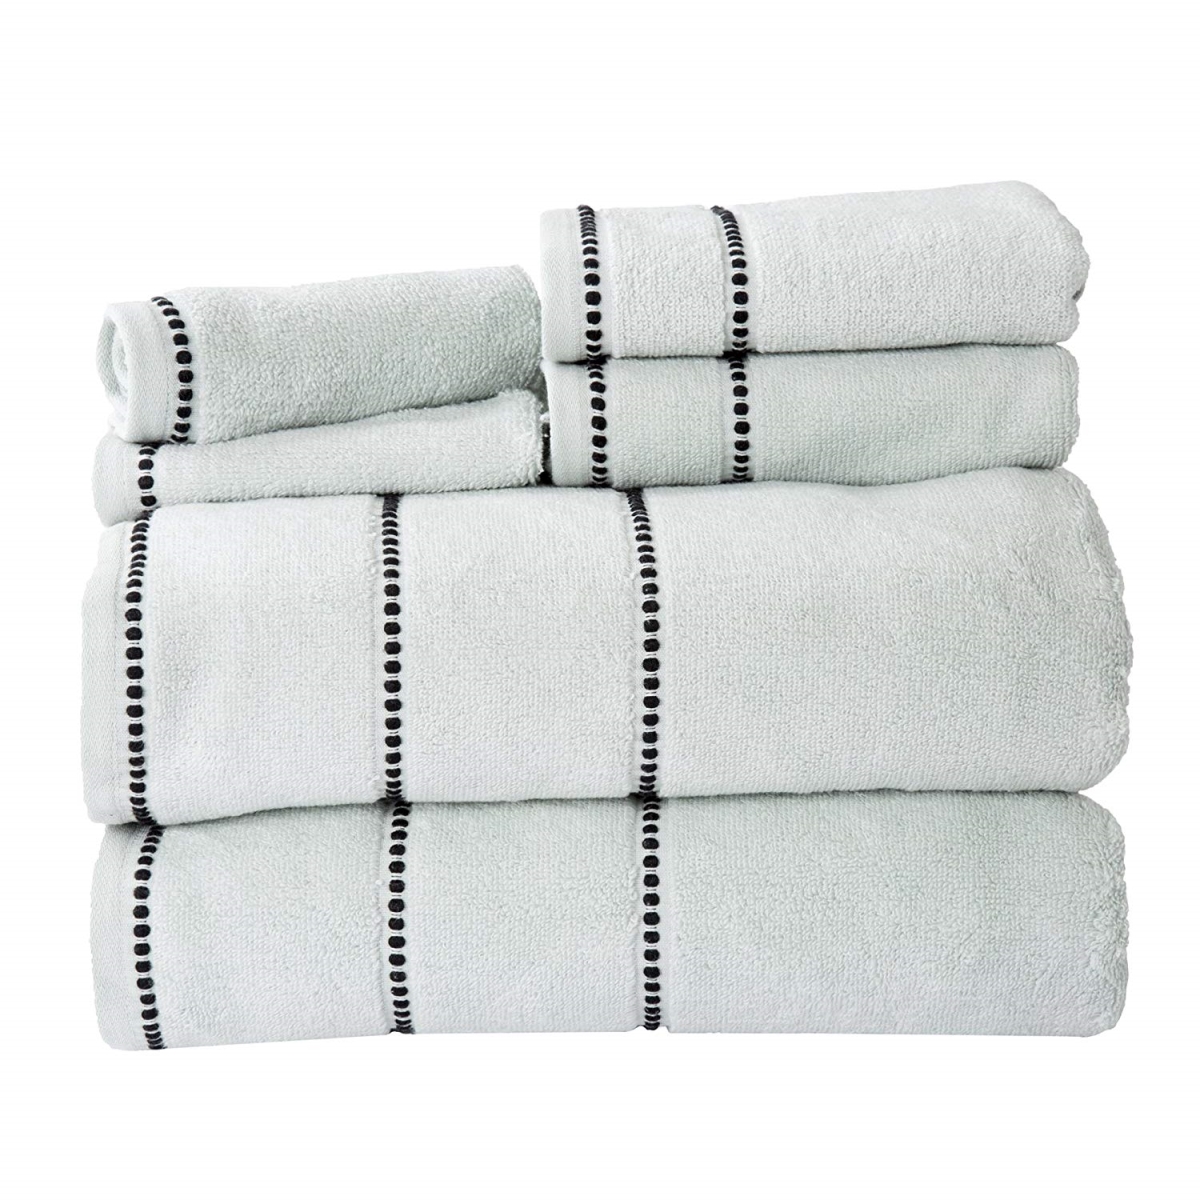 67a-76917 Quick Dry 100 Percent Cotton Zero Twist 6 Piece Towel Set - Seafoam